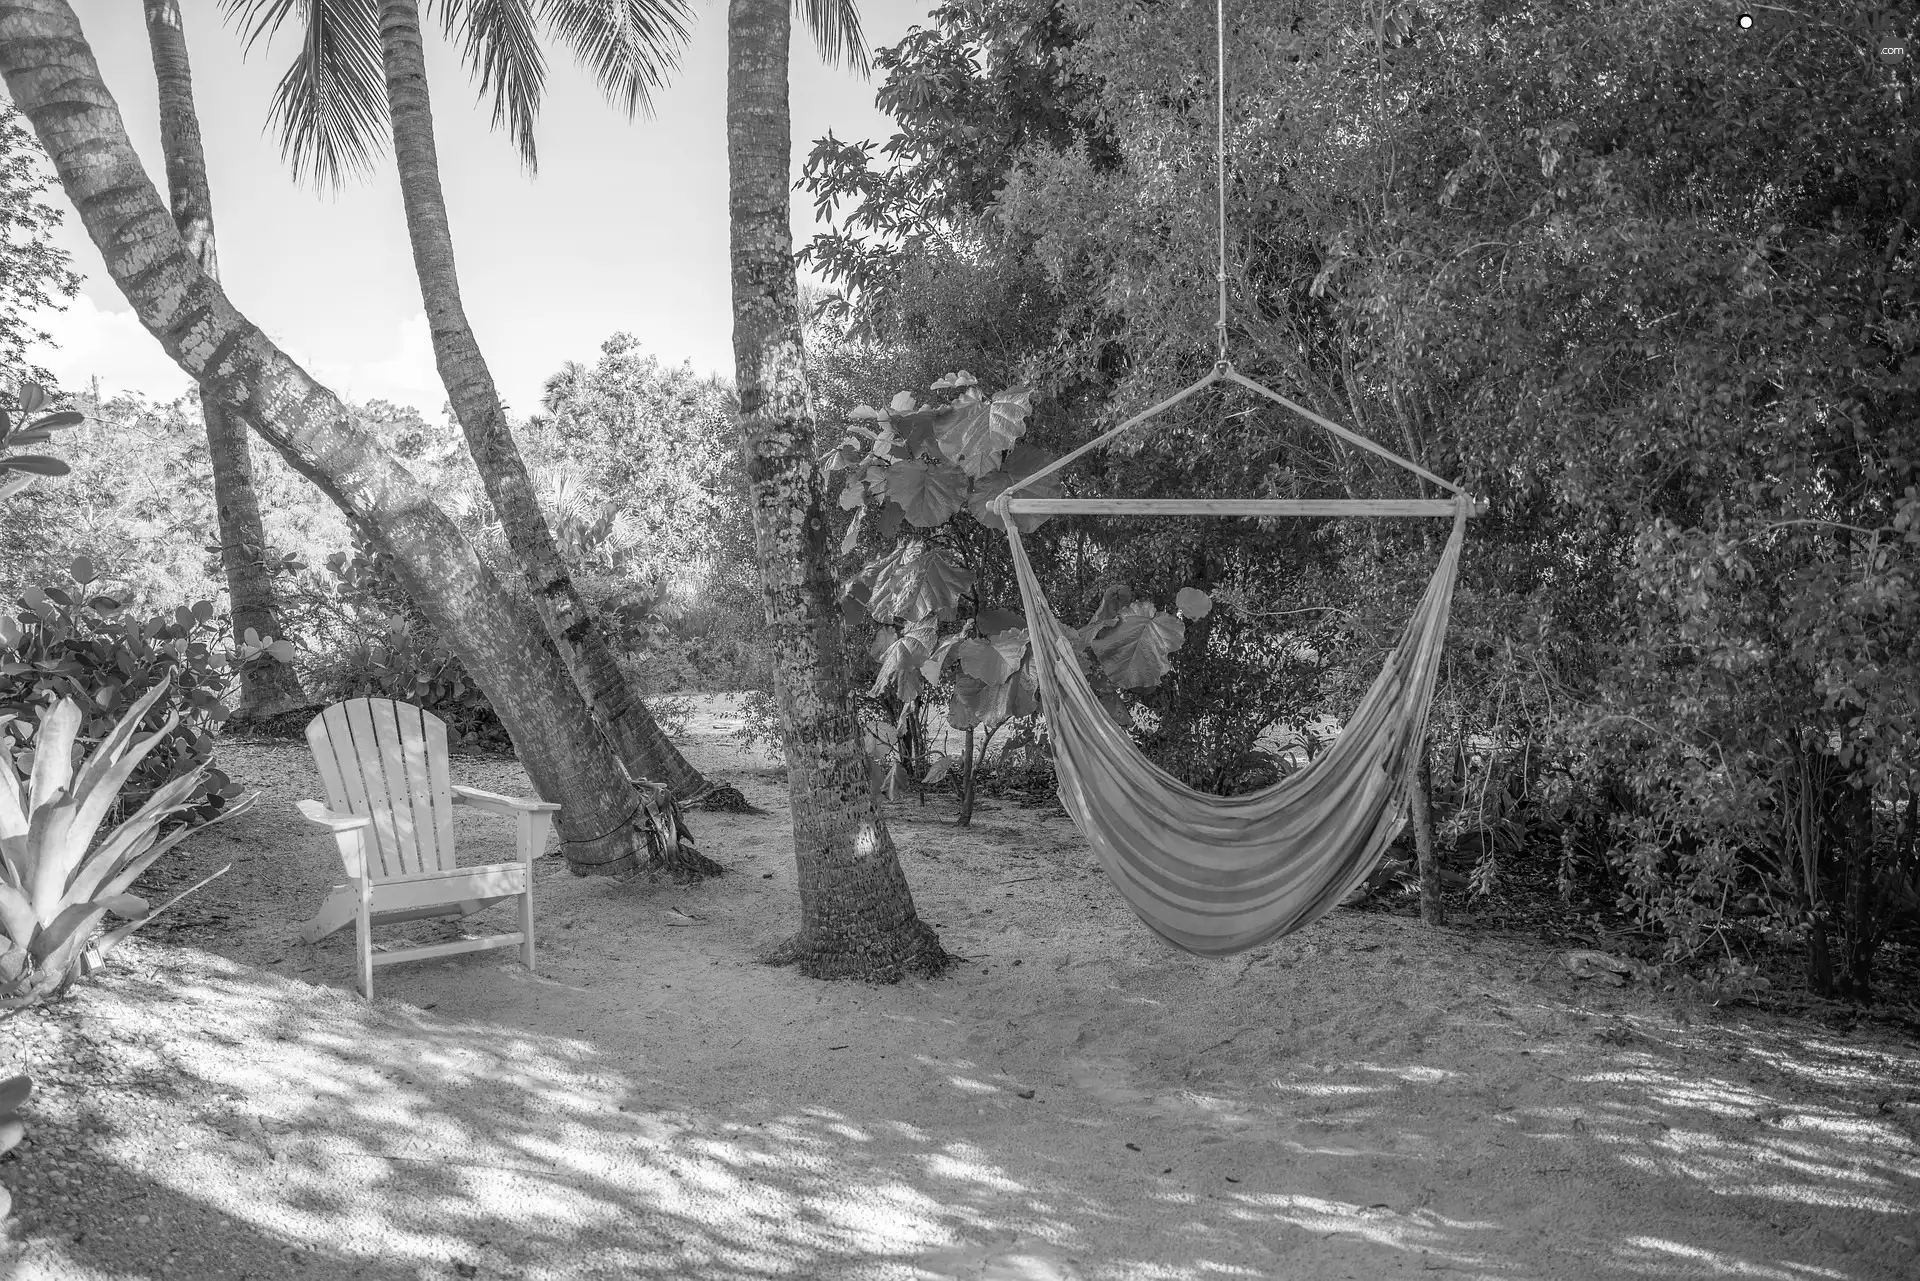 Palms, viewes, Chair, Bush, trees, Hammock, Sand